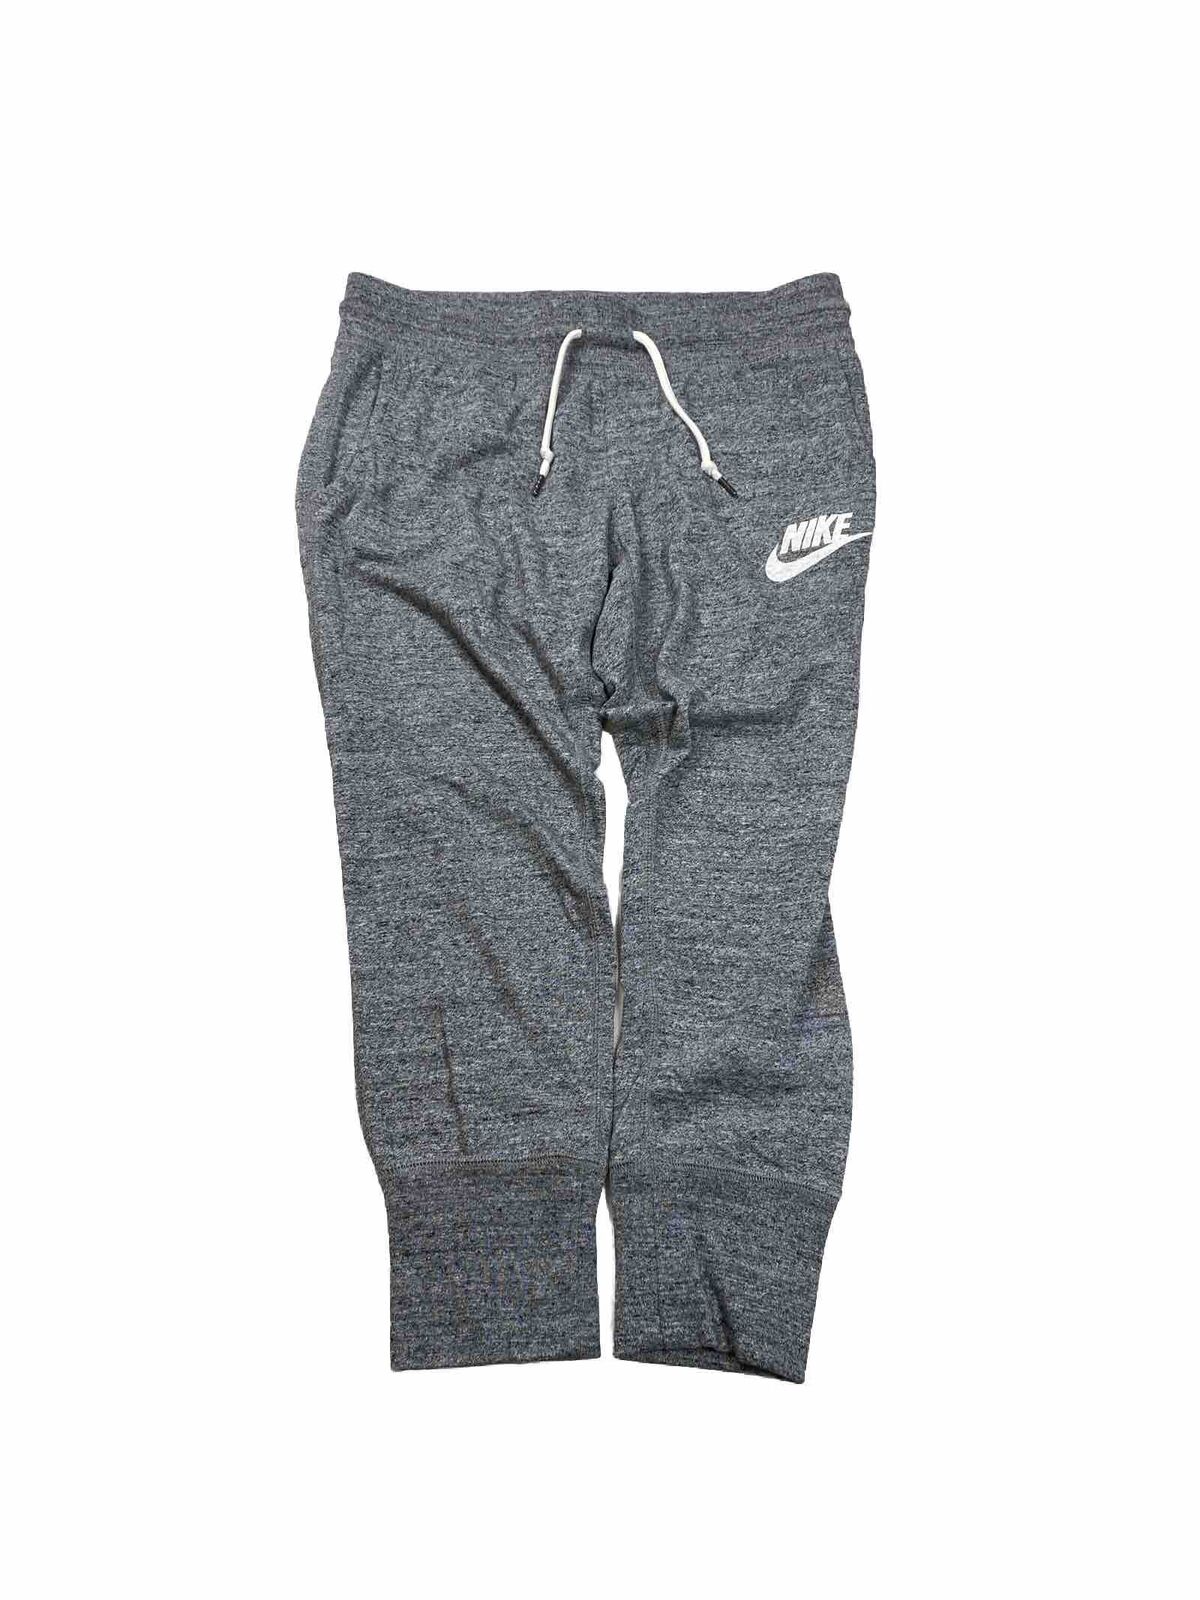 Nike Women's Gray Sportswear Capri Gym Sweatpants - S